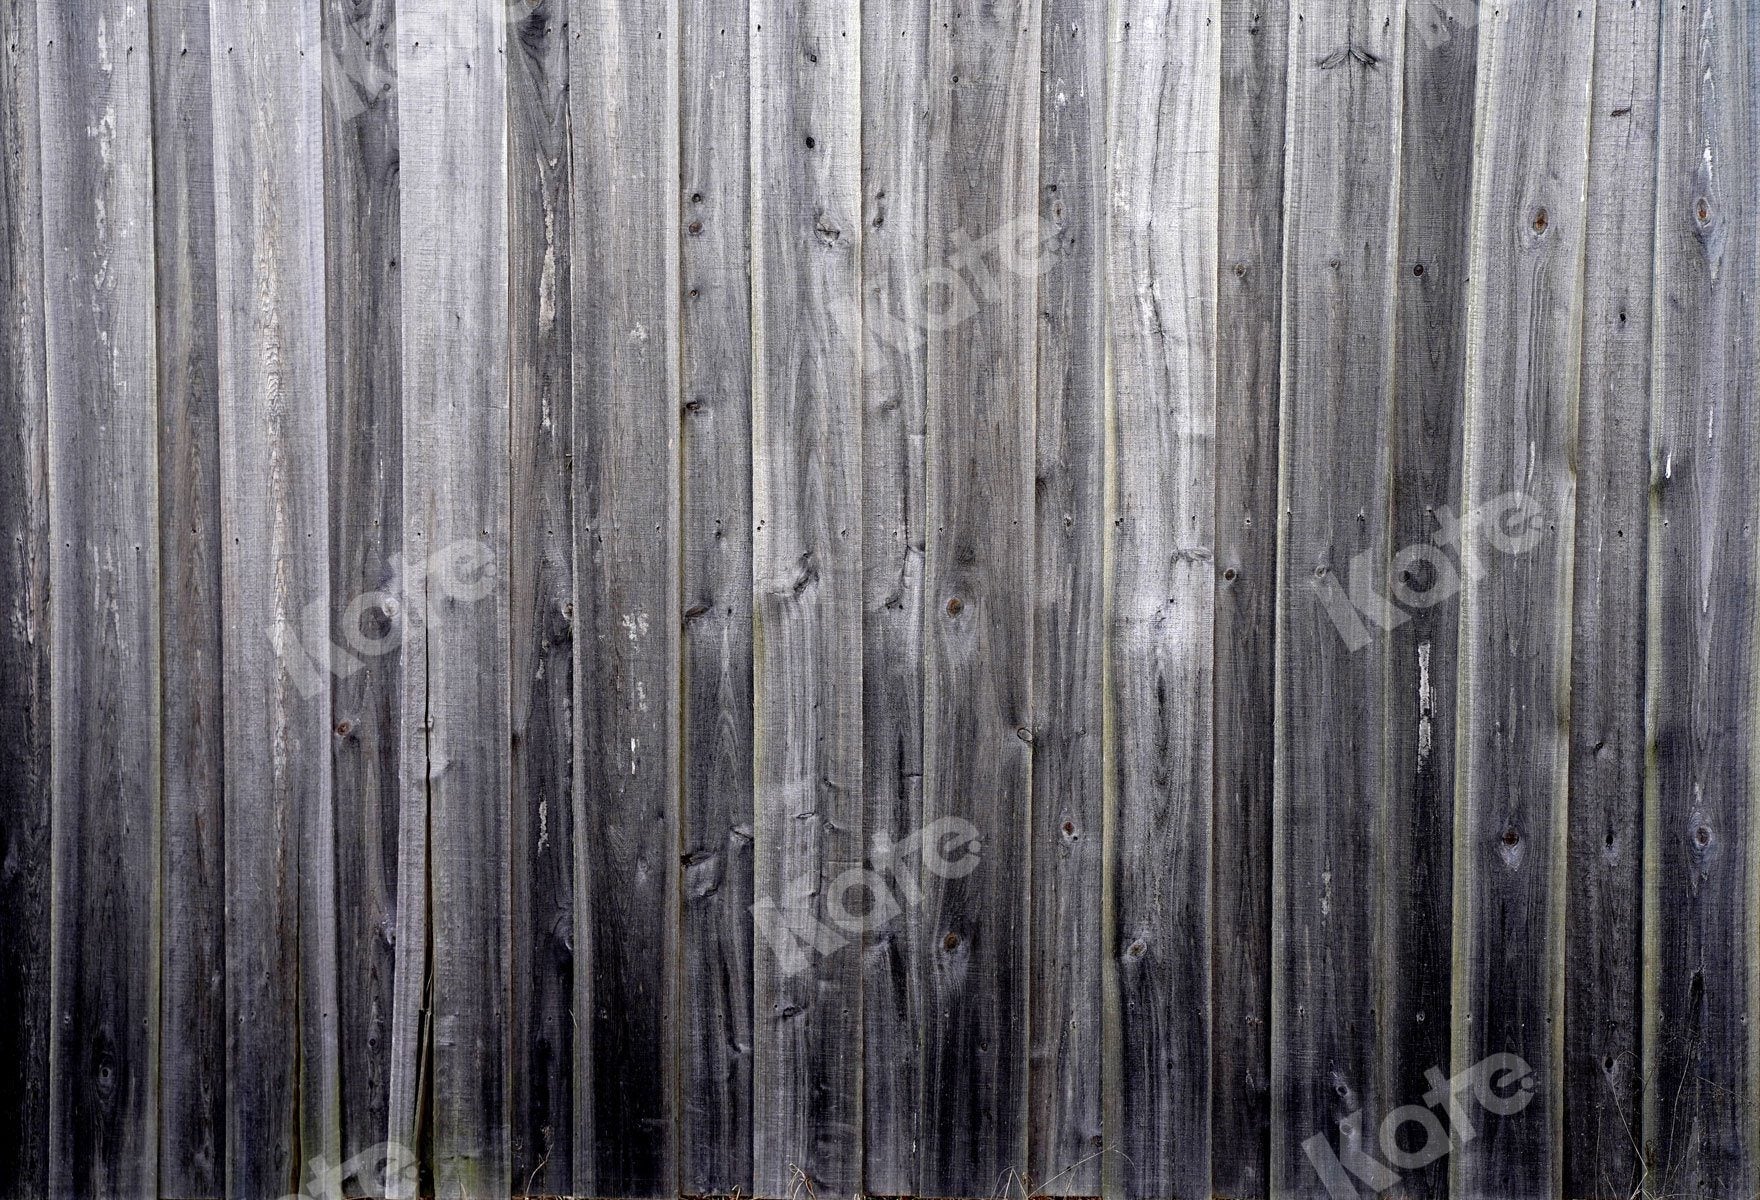 kate風化レトロな木製の壁の背景